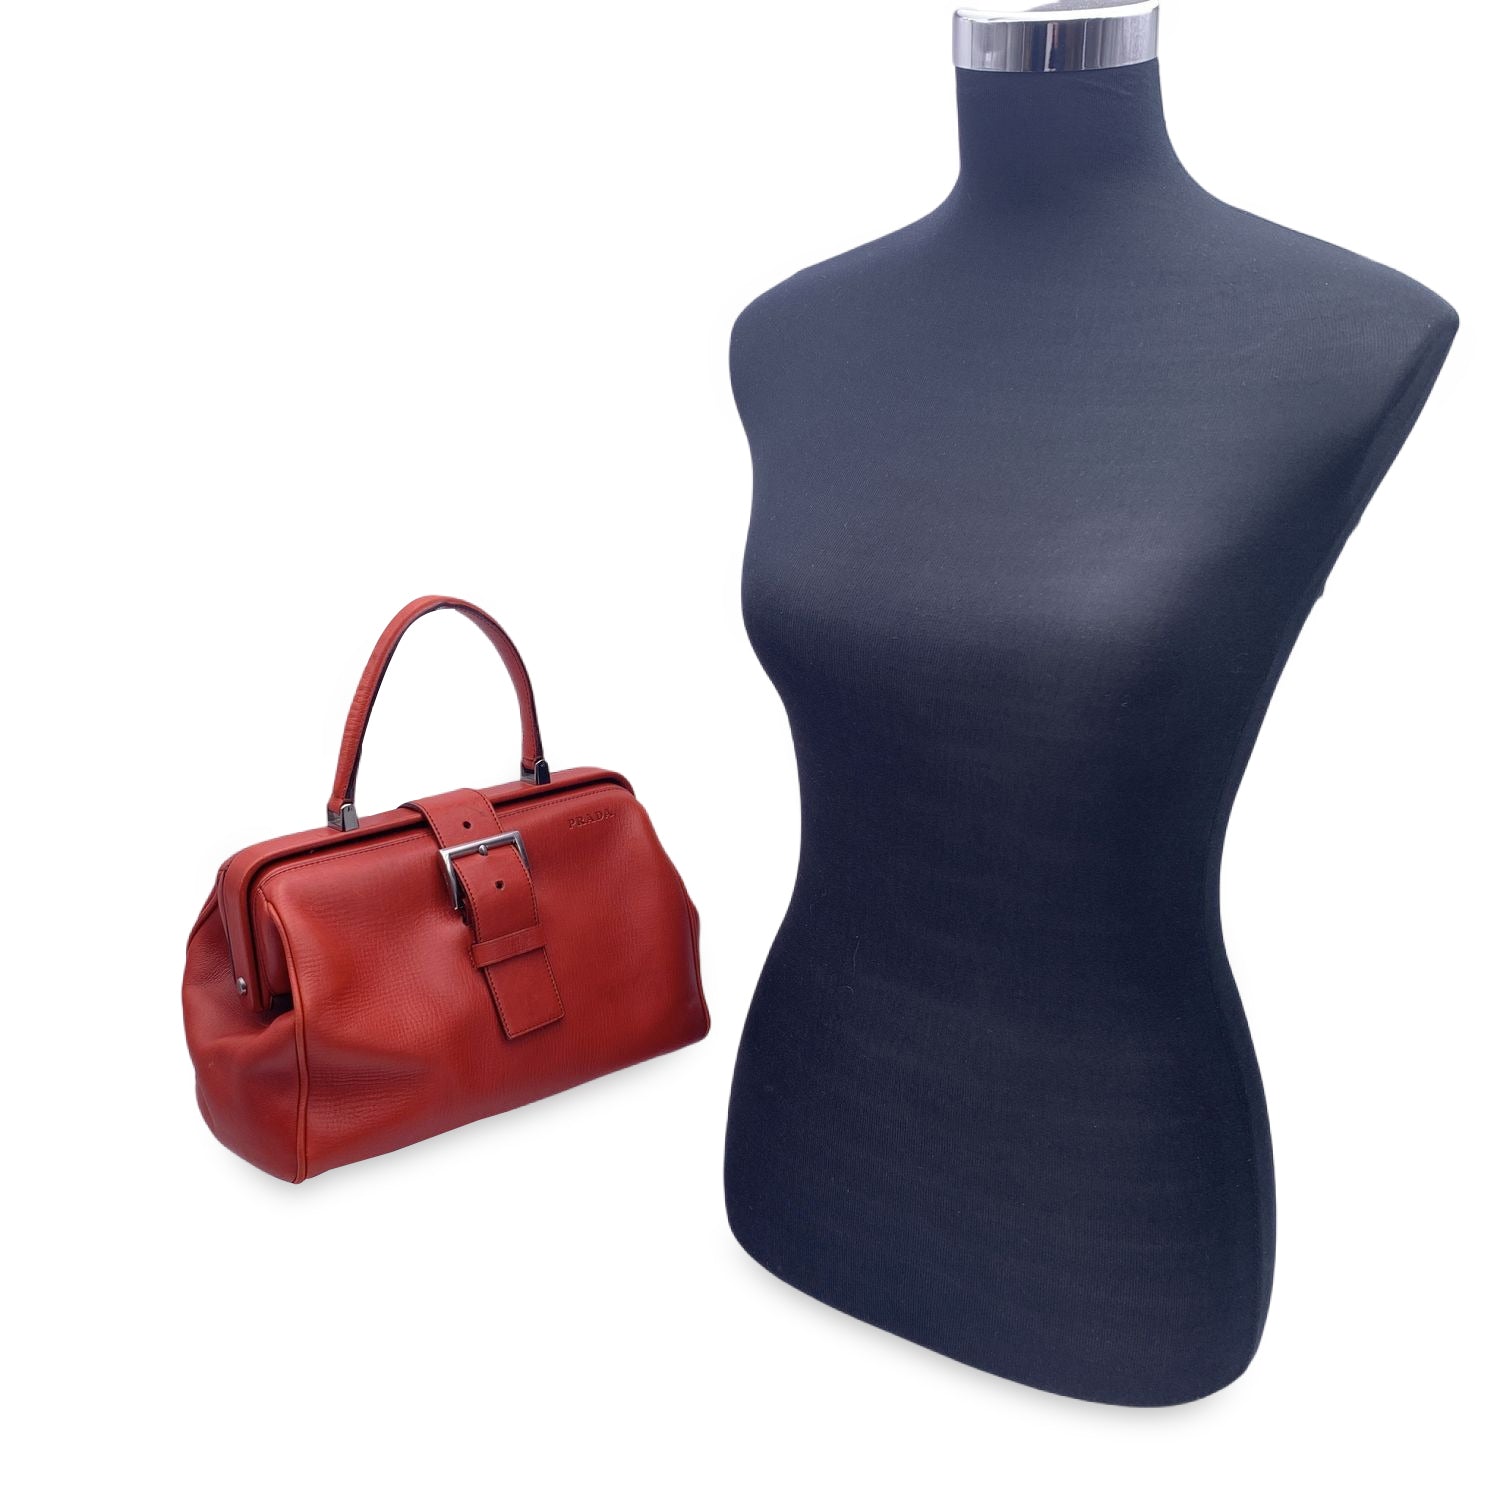 Prada Women's Cherry Red Leather Travel Satchel Handbag Bag : Buy Online at  Best Price in KSA - Souq is now Amazon.sa: Fashion